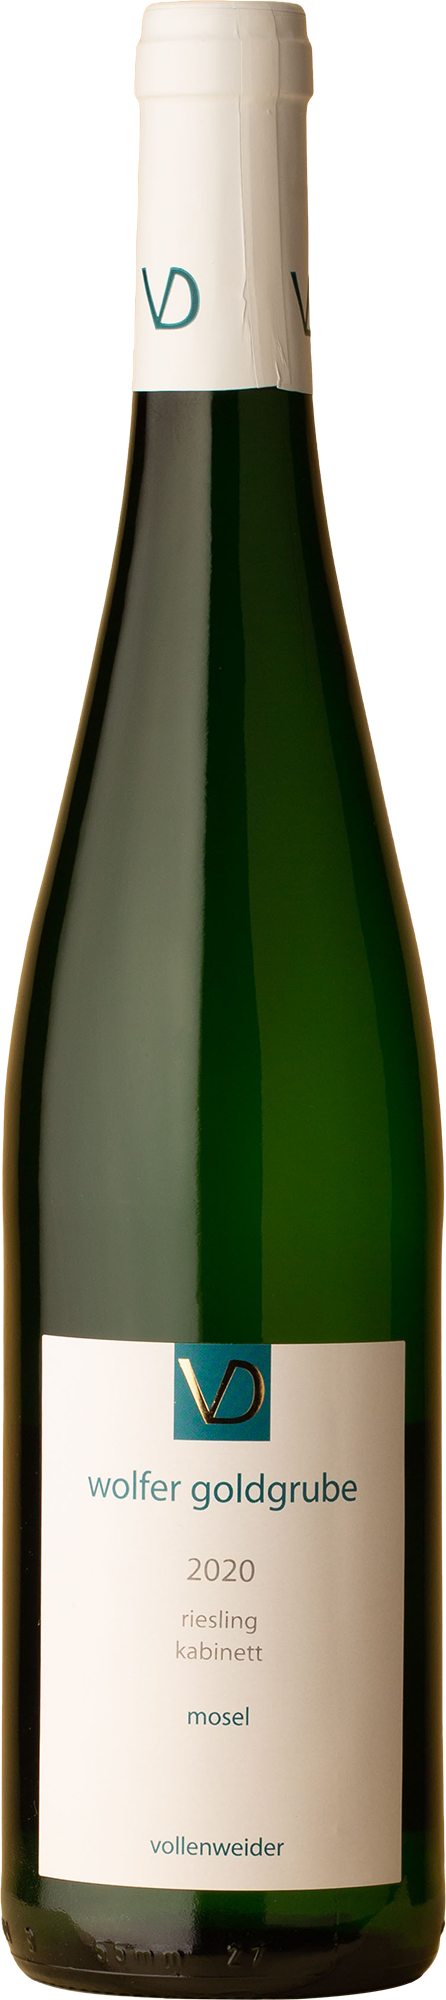 Vollenweider - Wolfer Goldgrube Kabinett Riesling 2020 White Wine